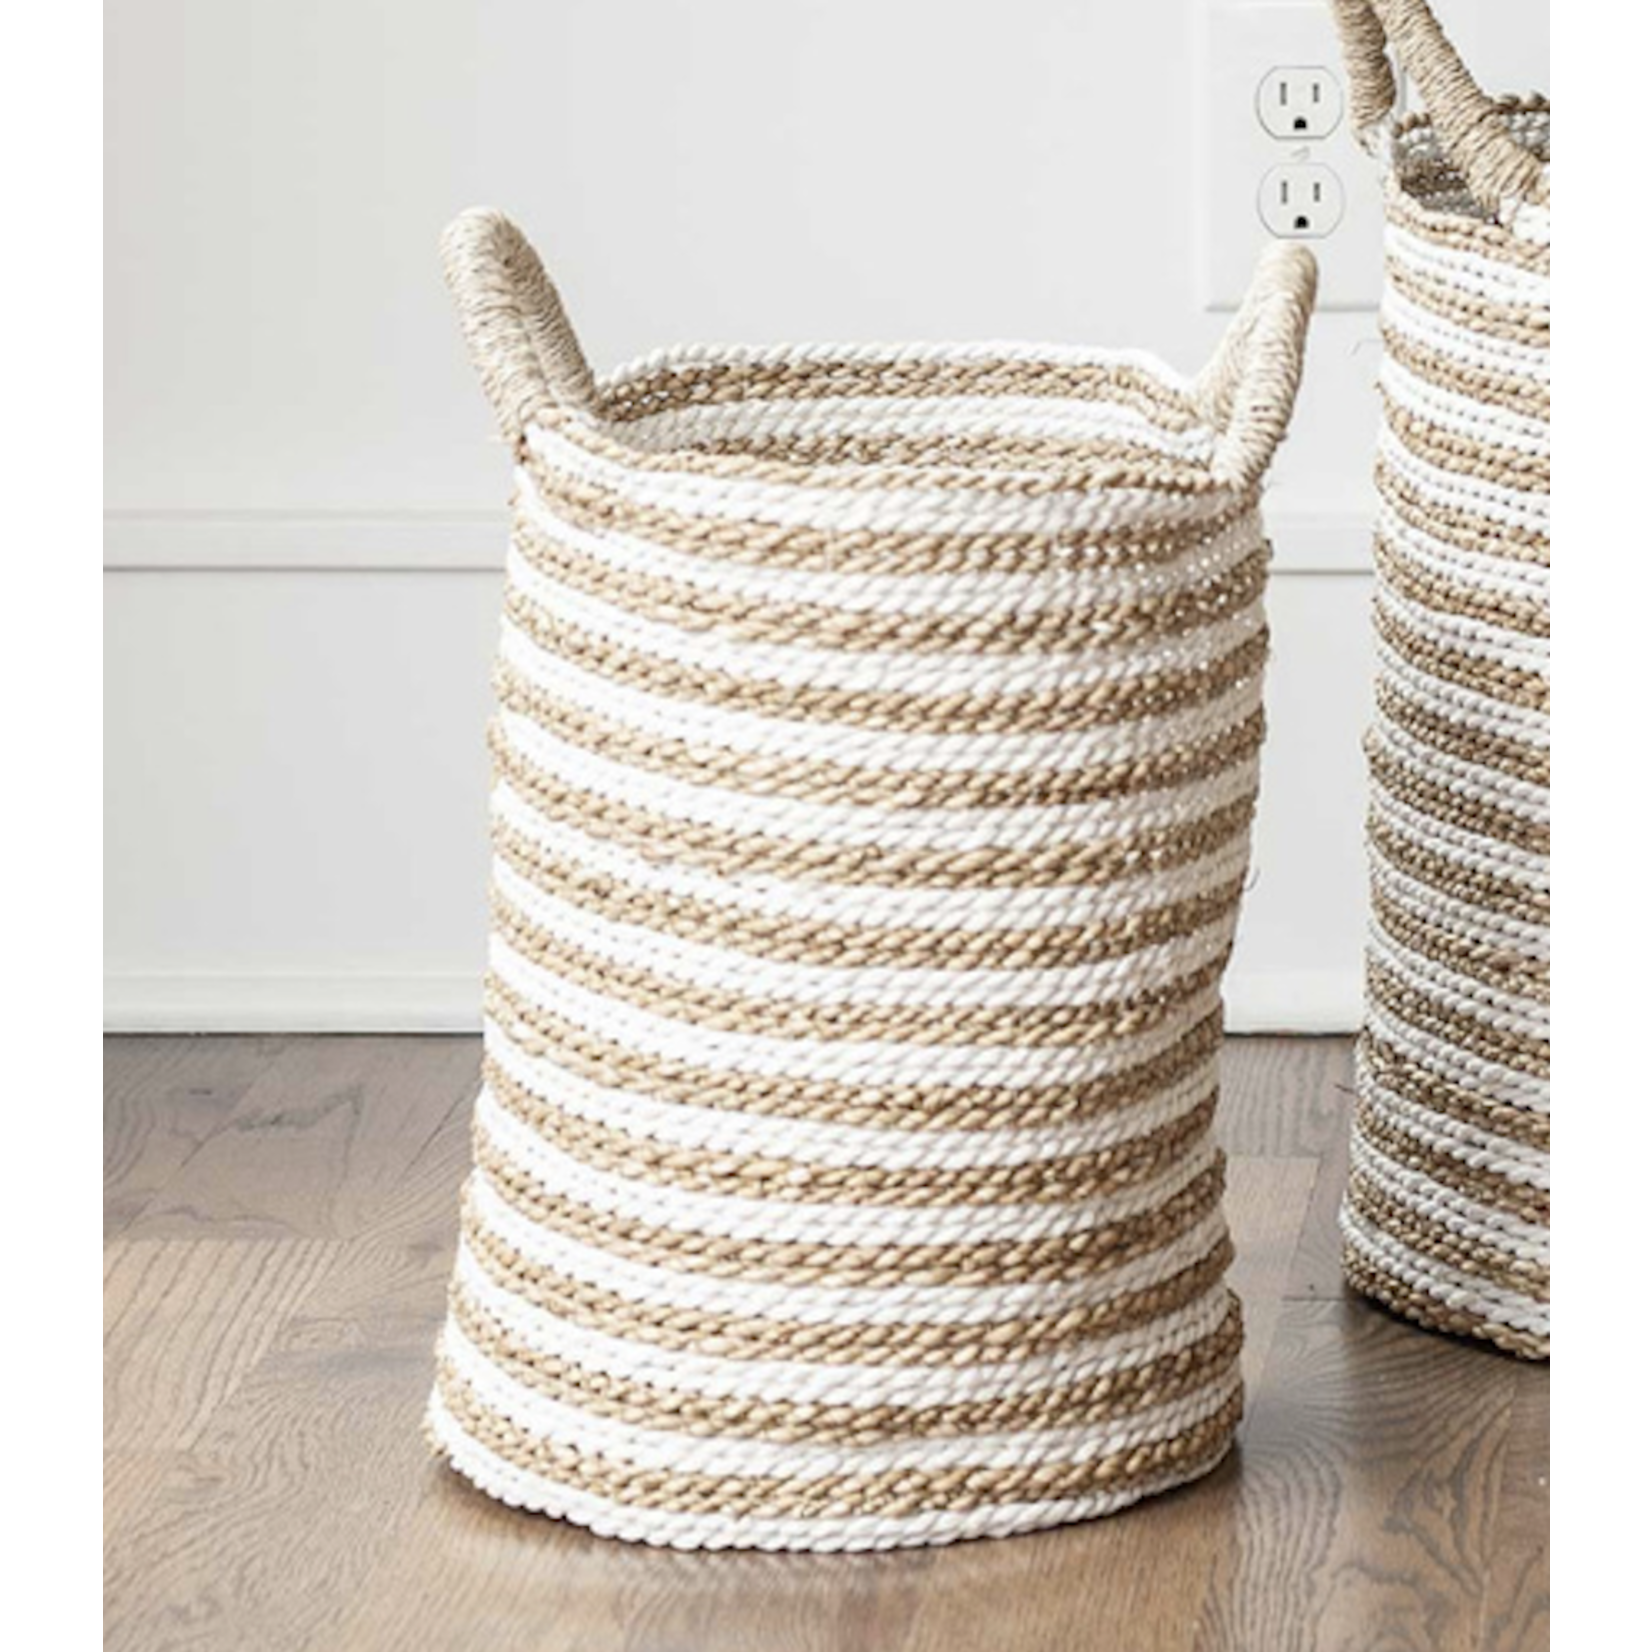 Outside The Box 16" White & Natural Stripes Hand-woven Basket